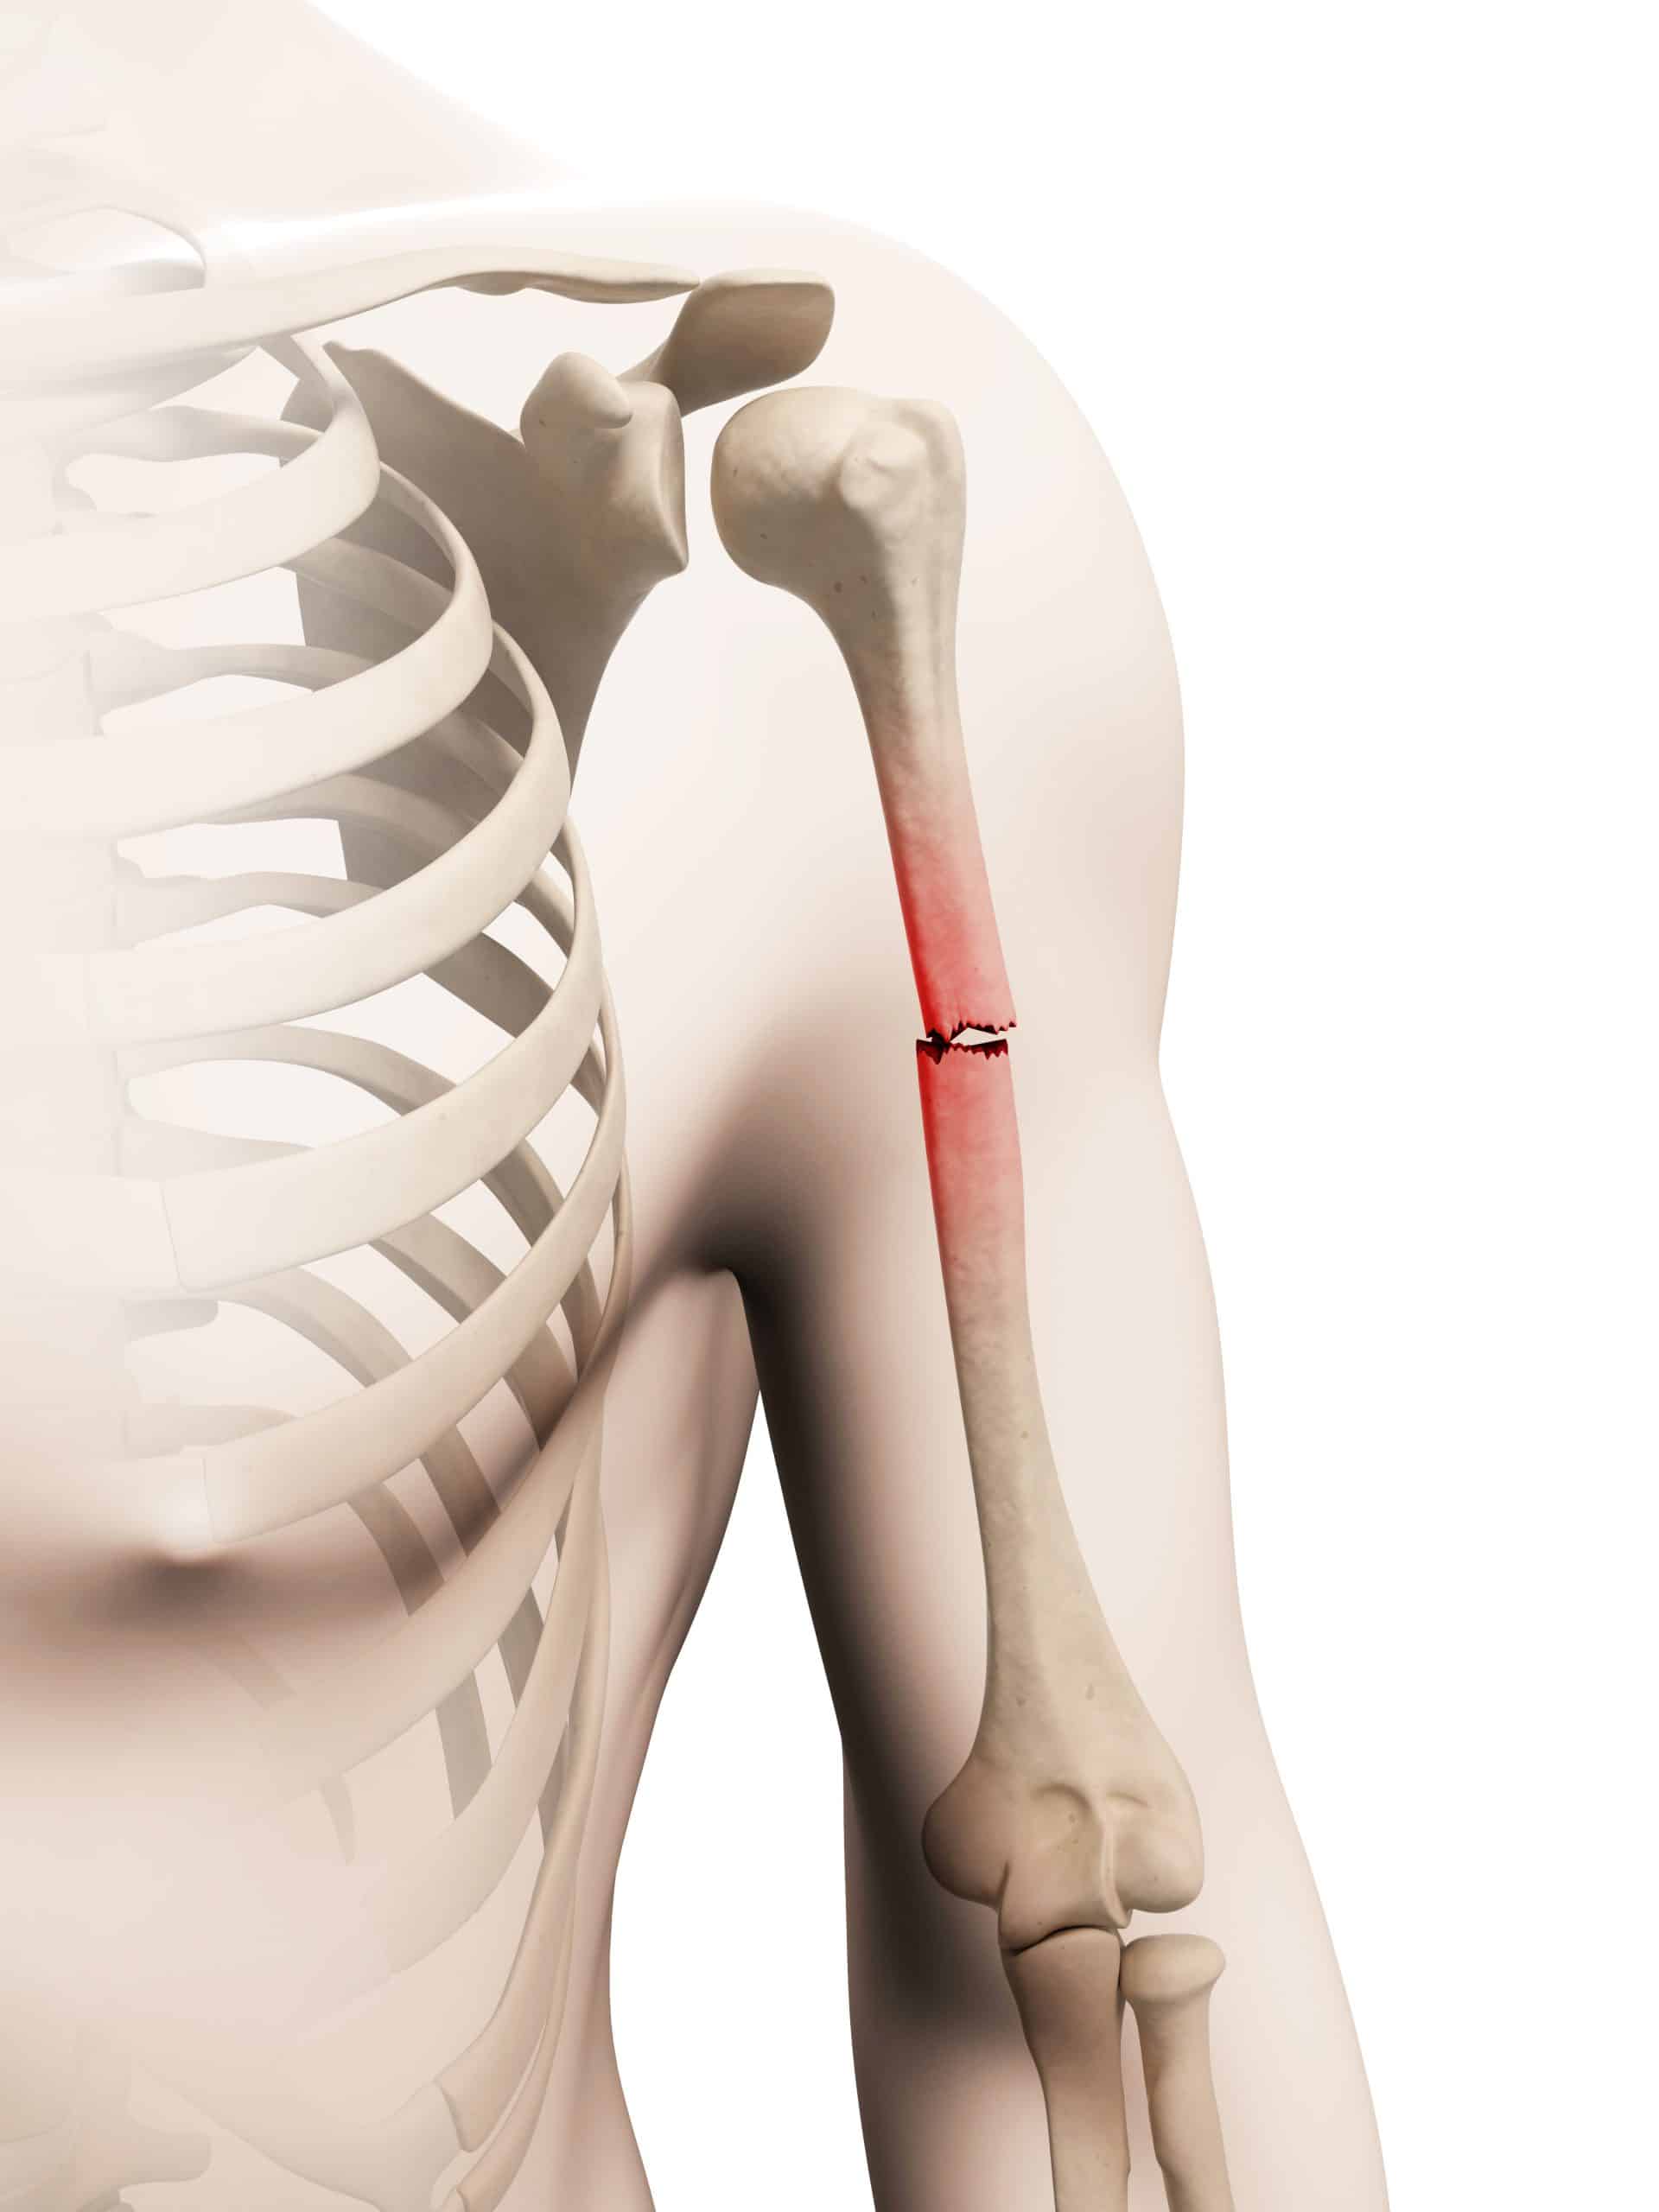 Humerus, Upper Arm, Shoulder Joint, & Arm Bone